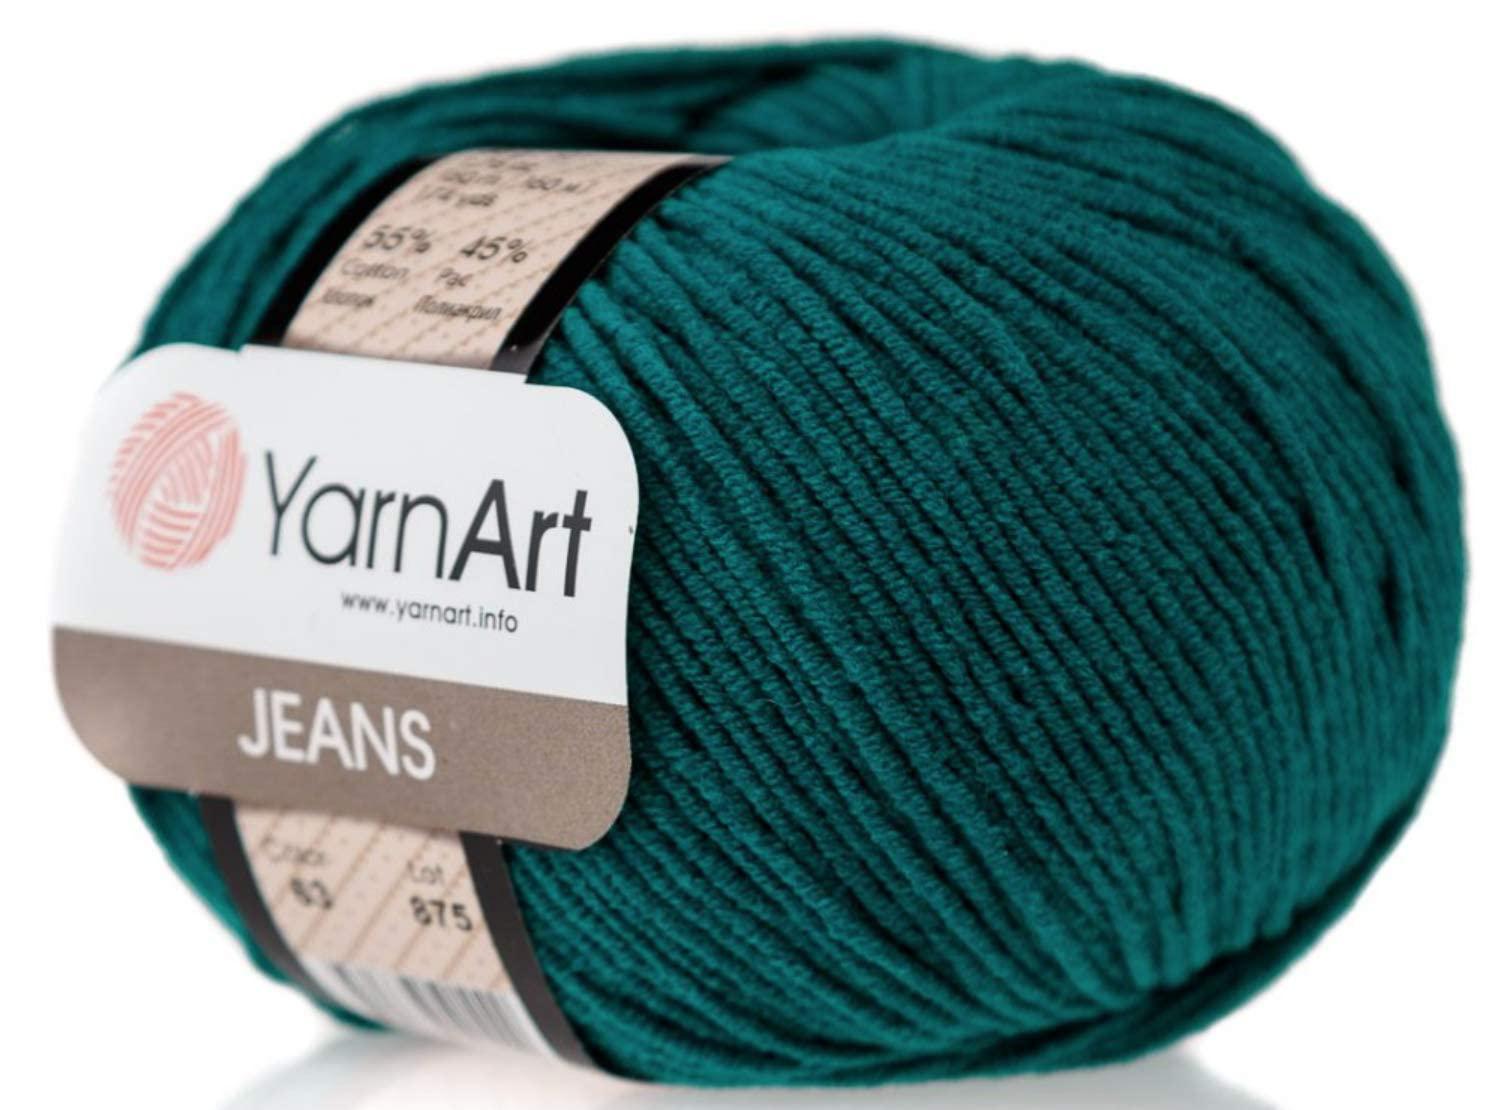 Yarn Art 4 skein 55% cotton 45% acrylic yarnart jeans yarn 200 gr 696